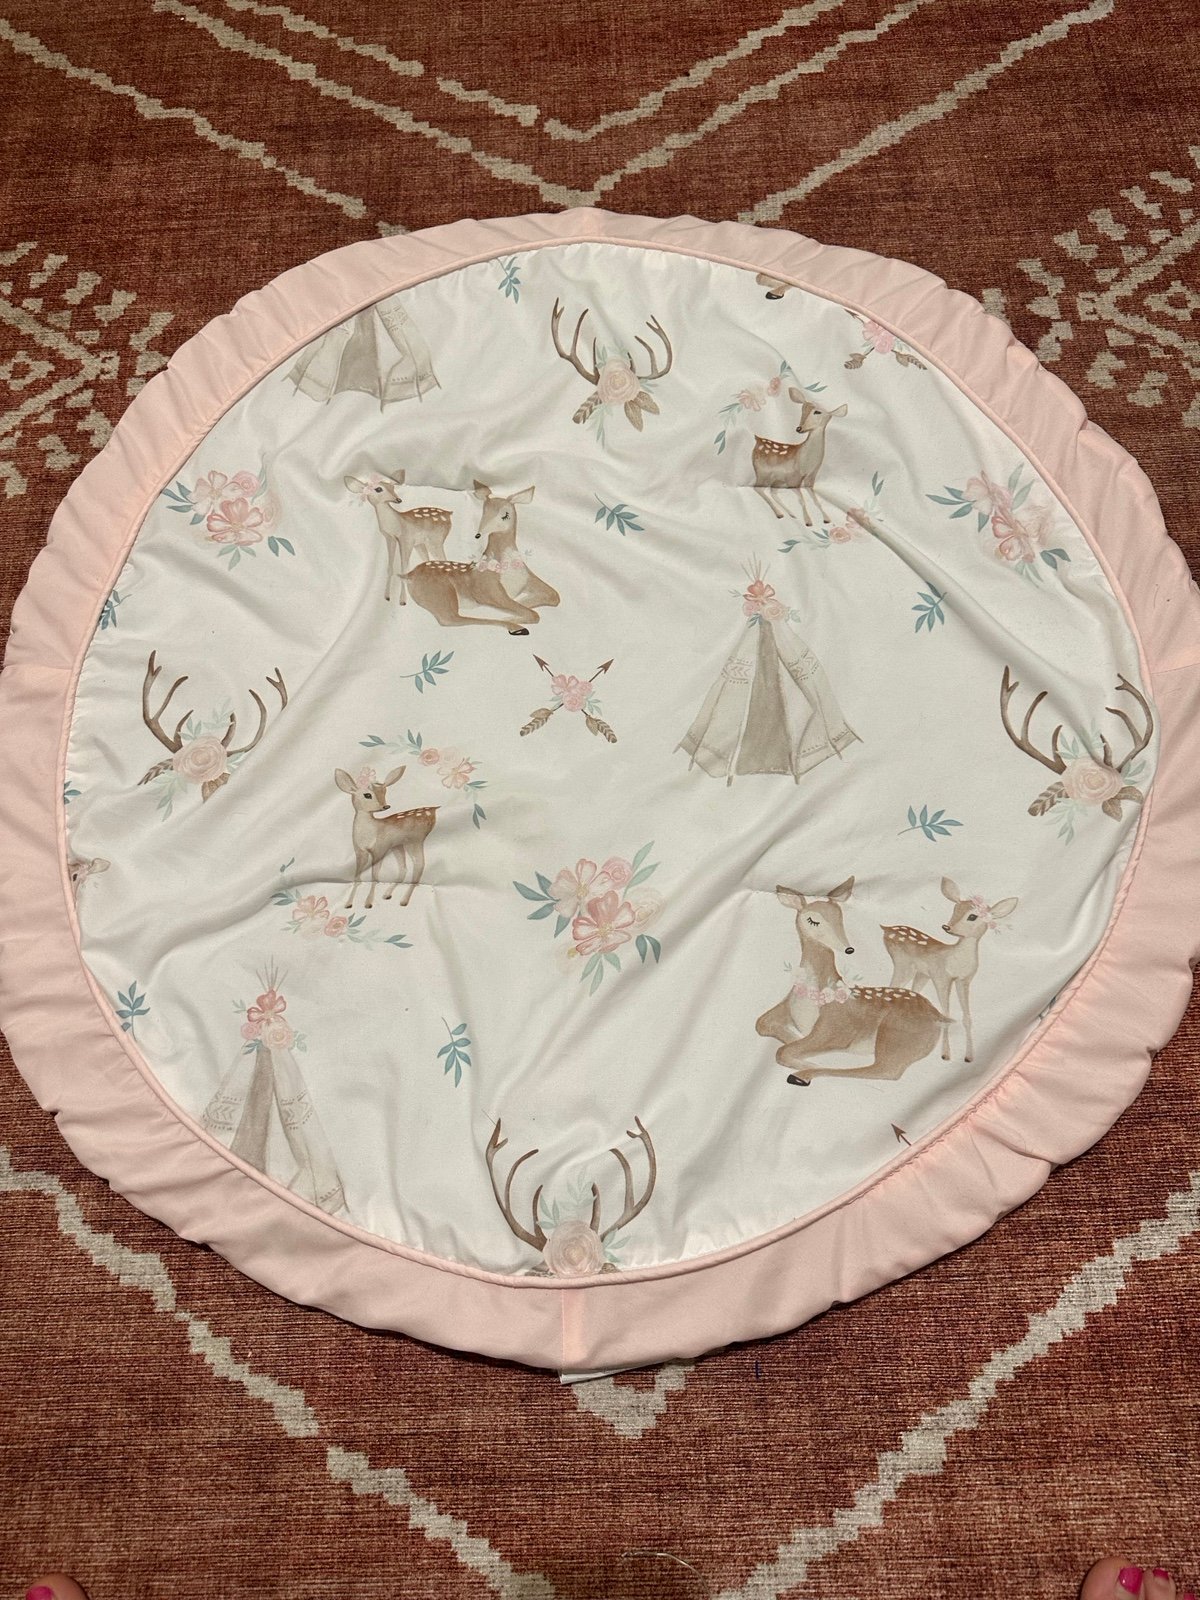 Sweet Jojo Designs Deer Floral Playmat 310NbRO2d